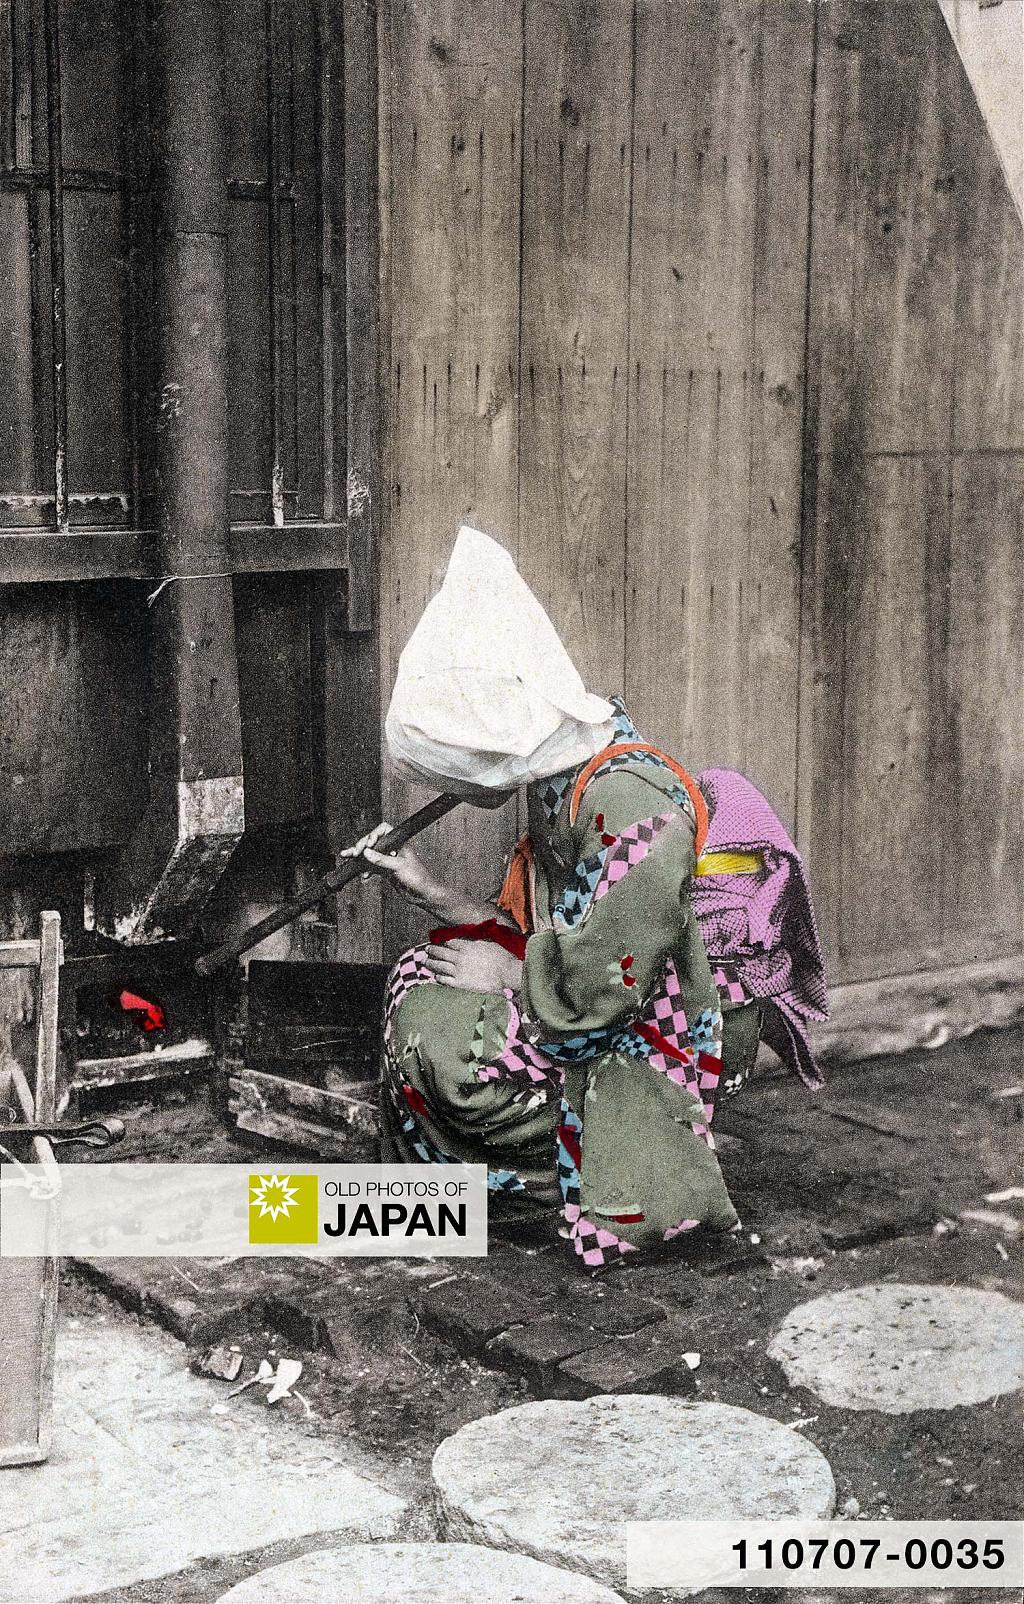 110707-0035 - Heating Bathwater in Japan, 1900s